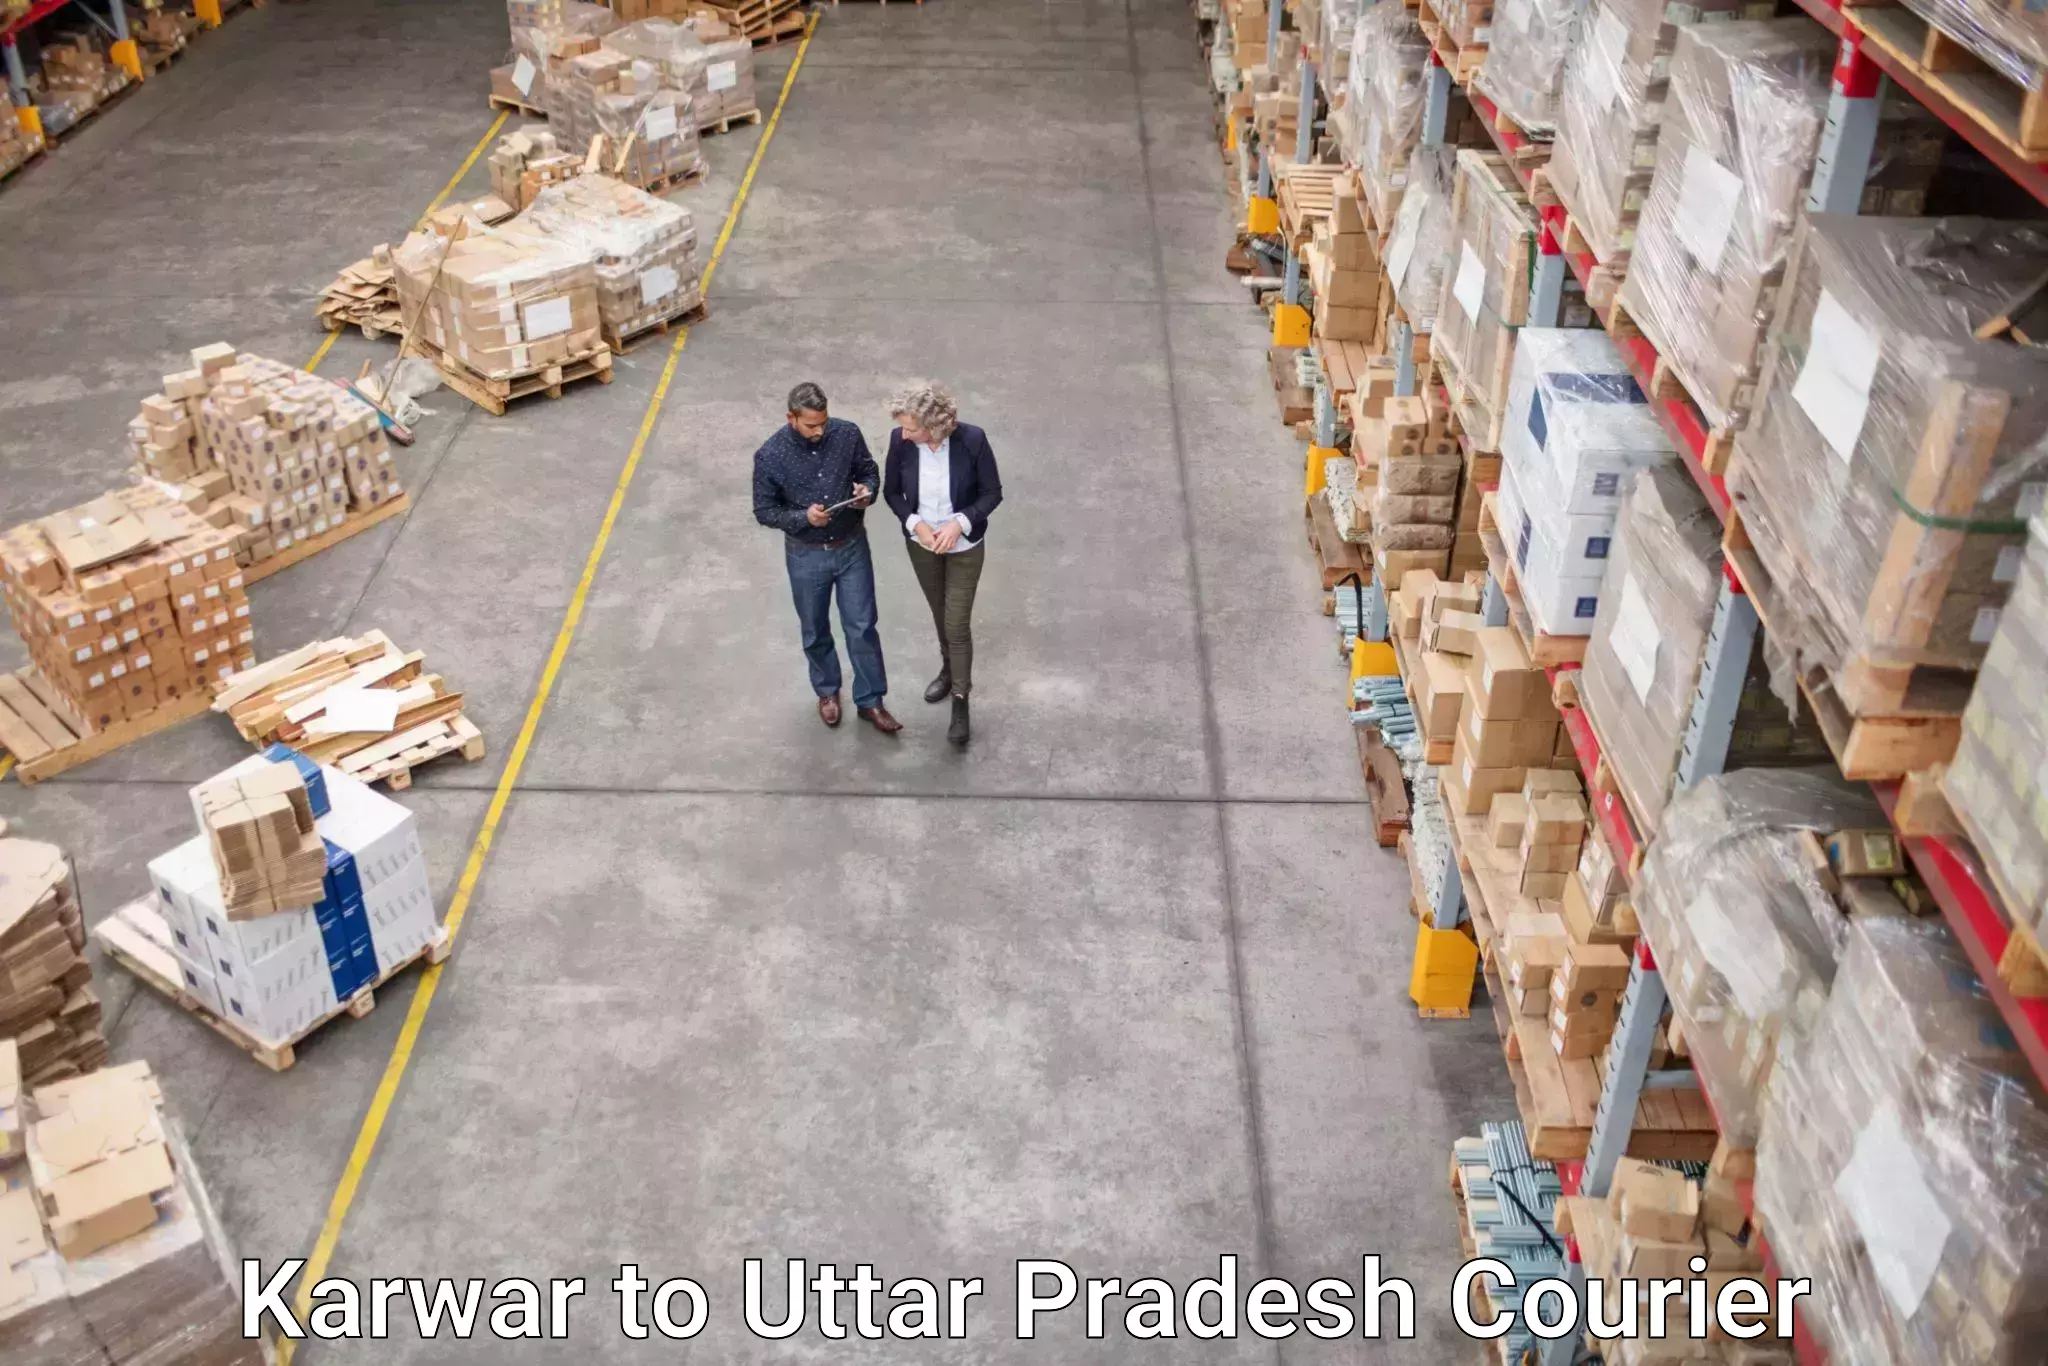 Reliable shipping partners Karwar to Varanasi